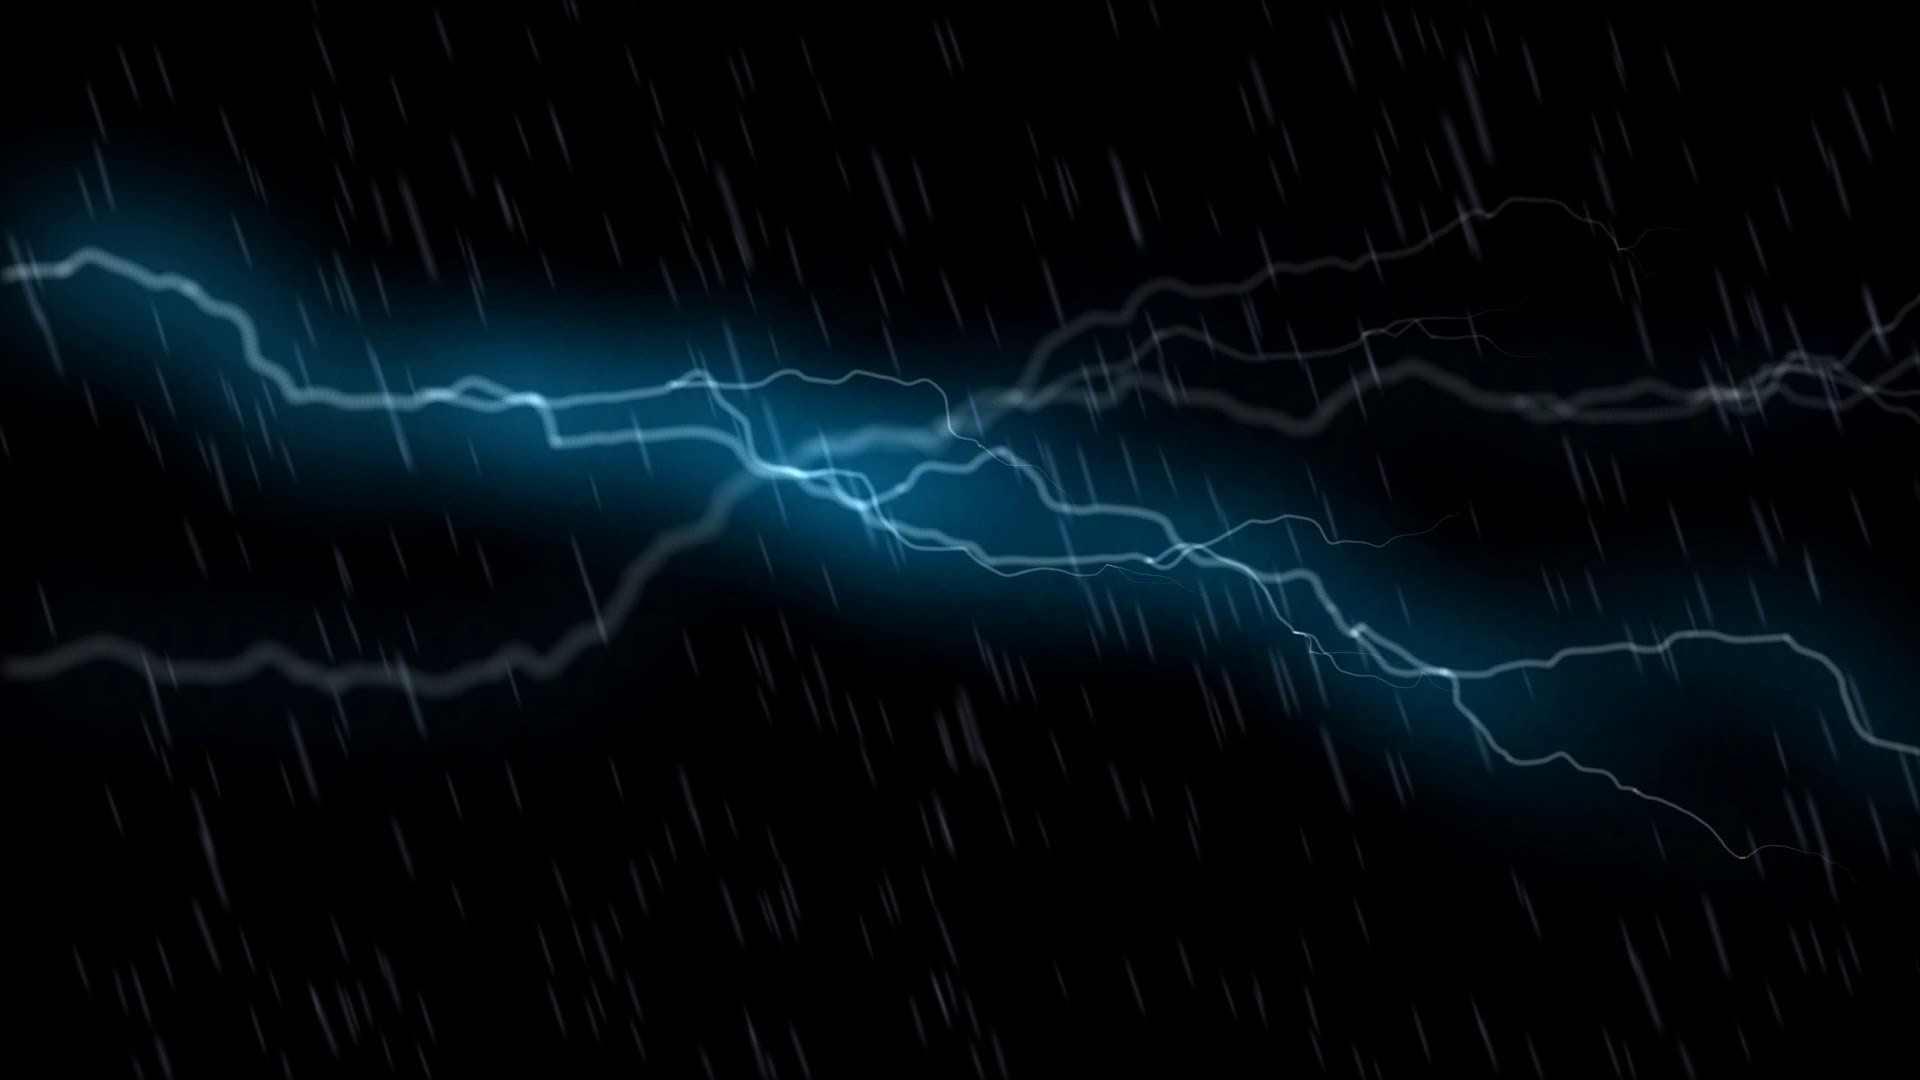 1920x1080 Thunder Storm and Rain Animation - Free HD Stock Footage - YouTube